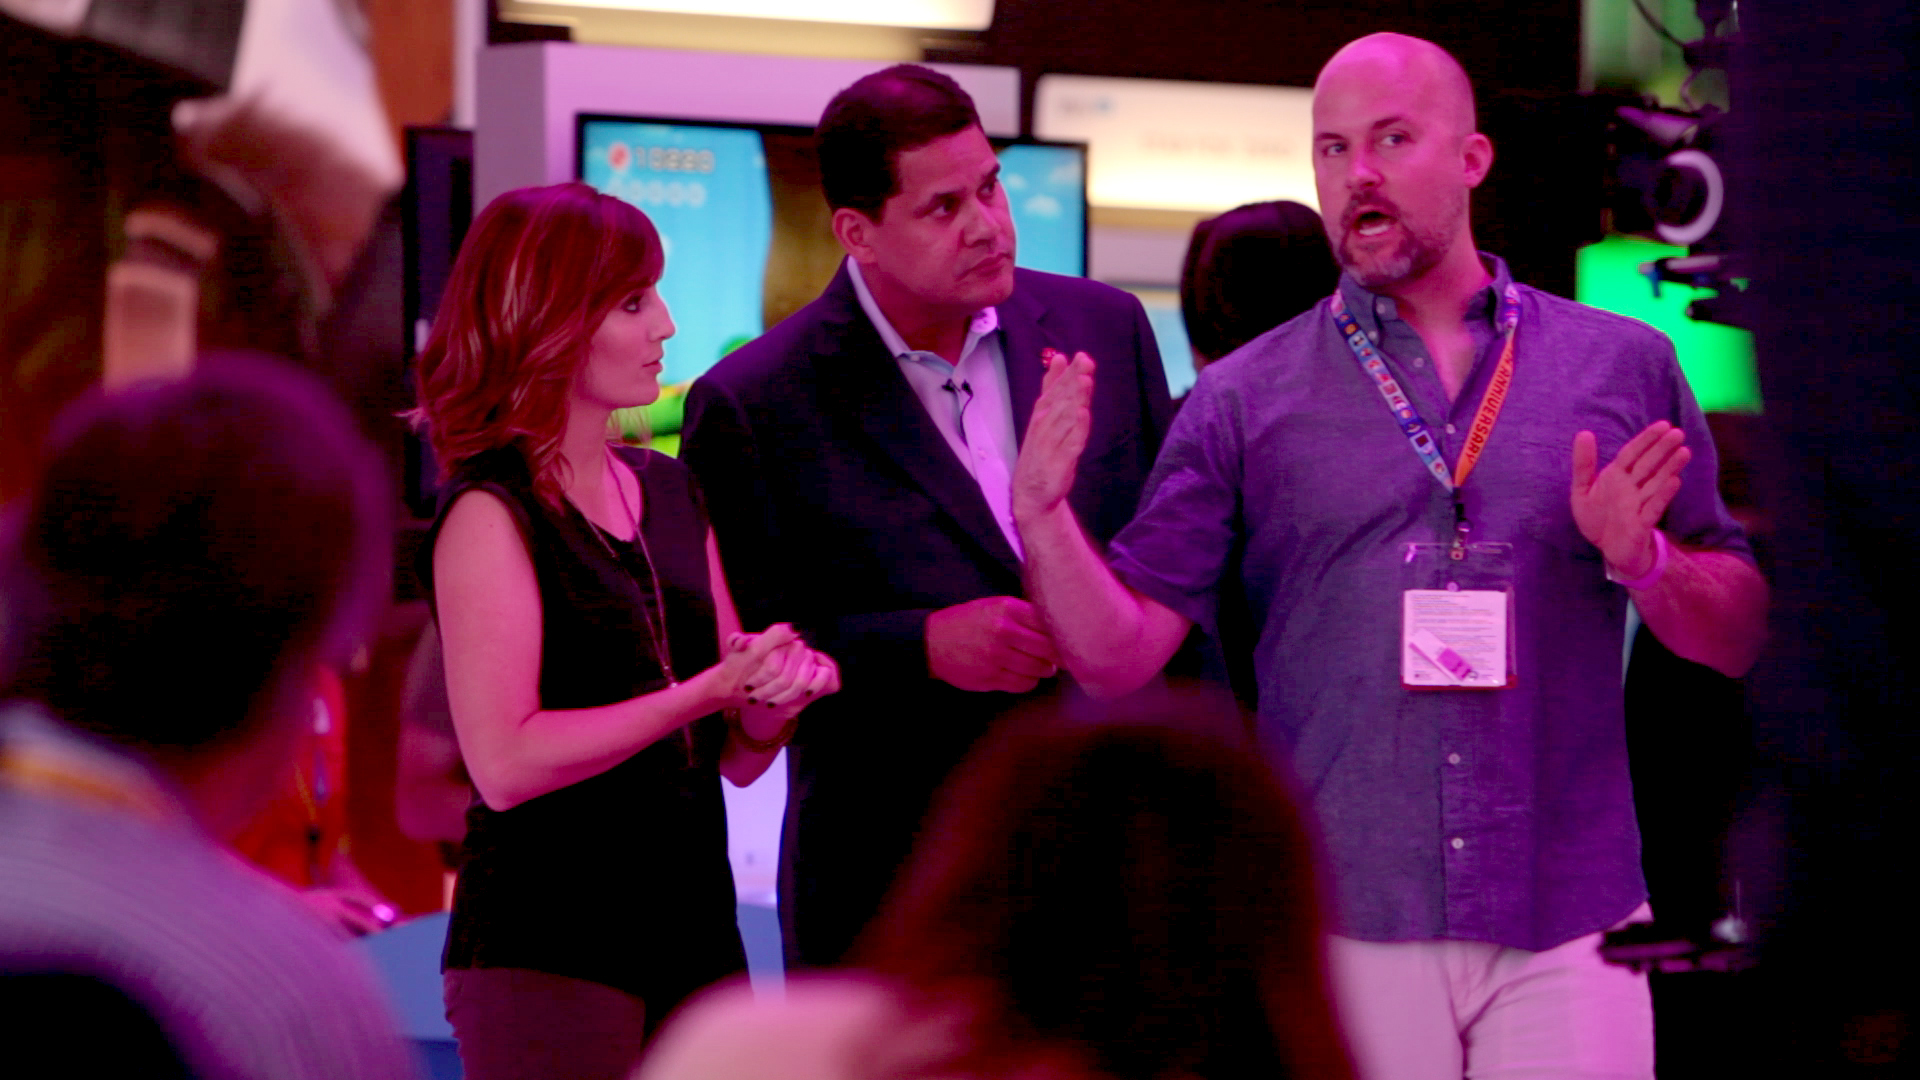 E3 2015 shoot with host Alison Haislip, Director Jeremy Snead talking Nintendo Reggie Fils-Aimee through shots